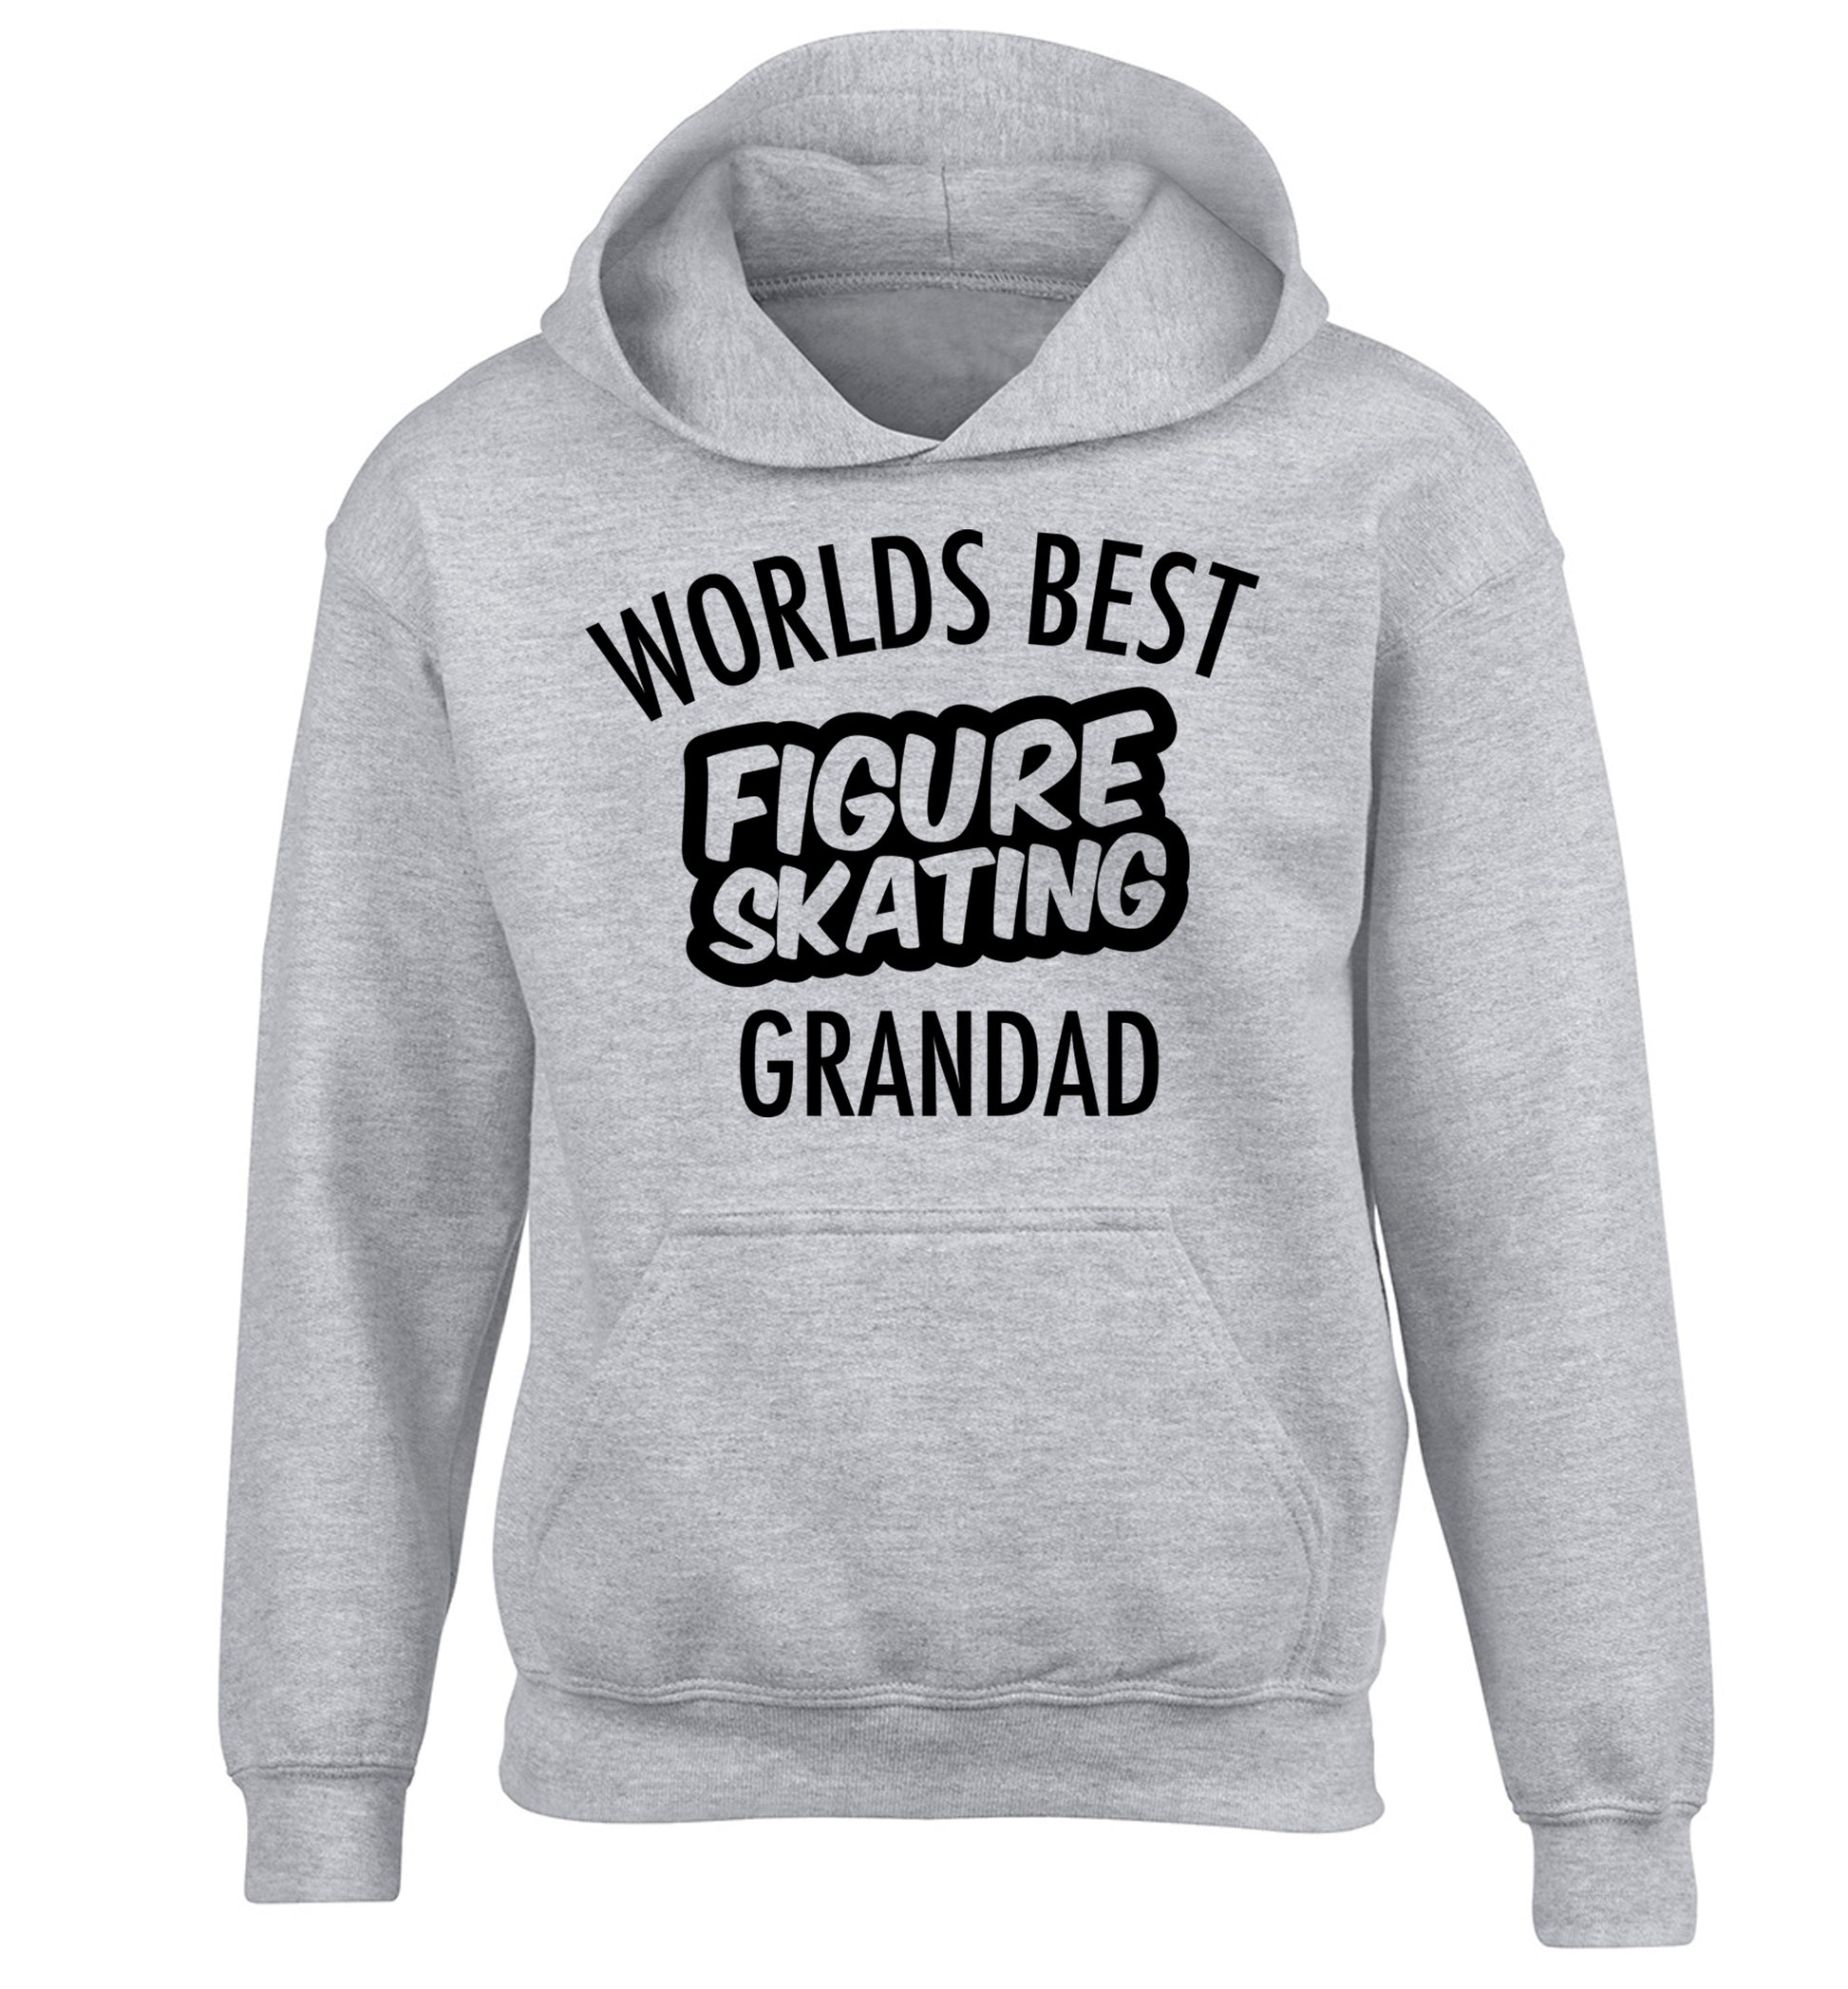 Worlds best figure skating grandad children's grey hoodie 12-14 Years